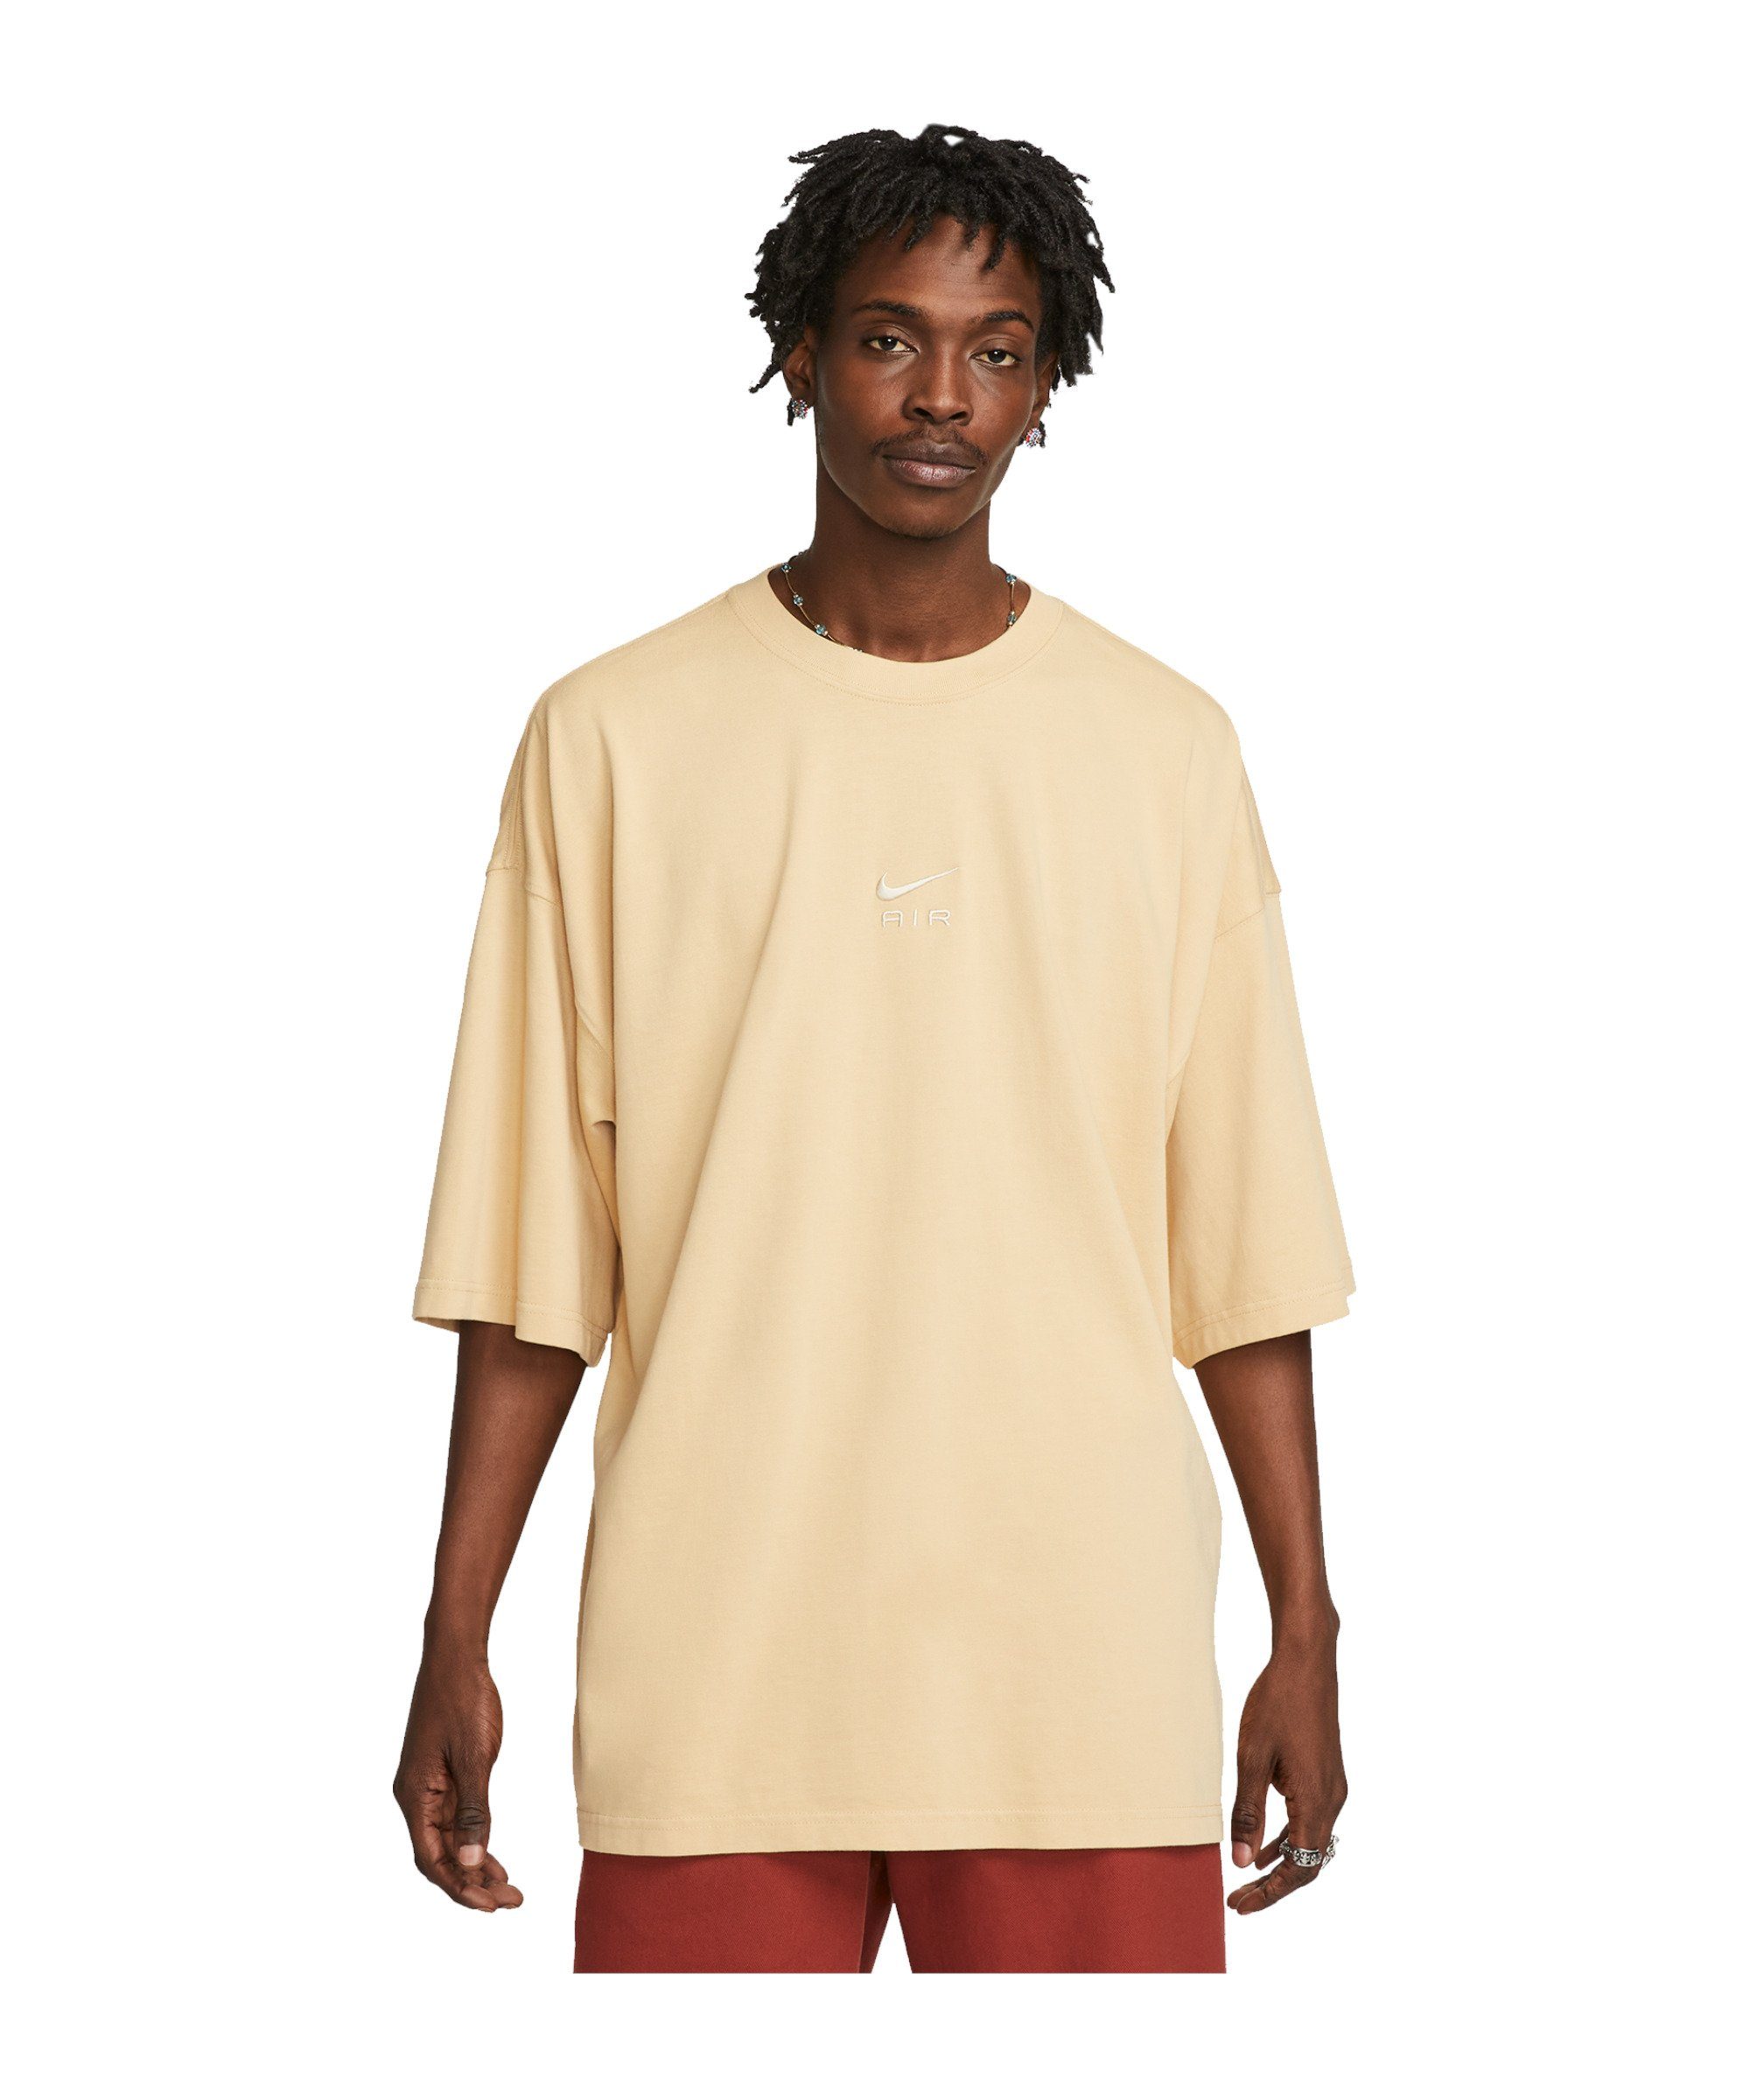 Sportswear T-Shirt Air gelb default T-Shirt Nike